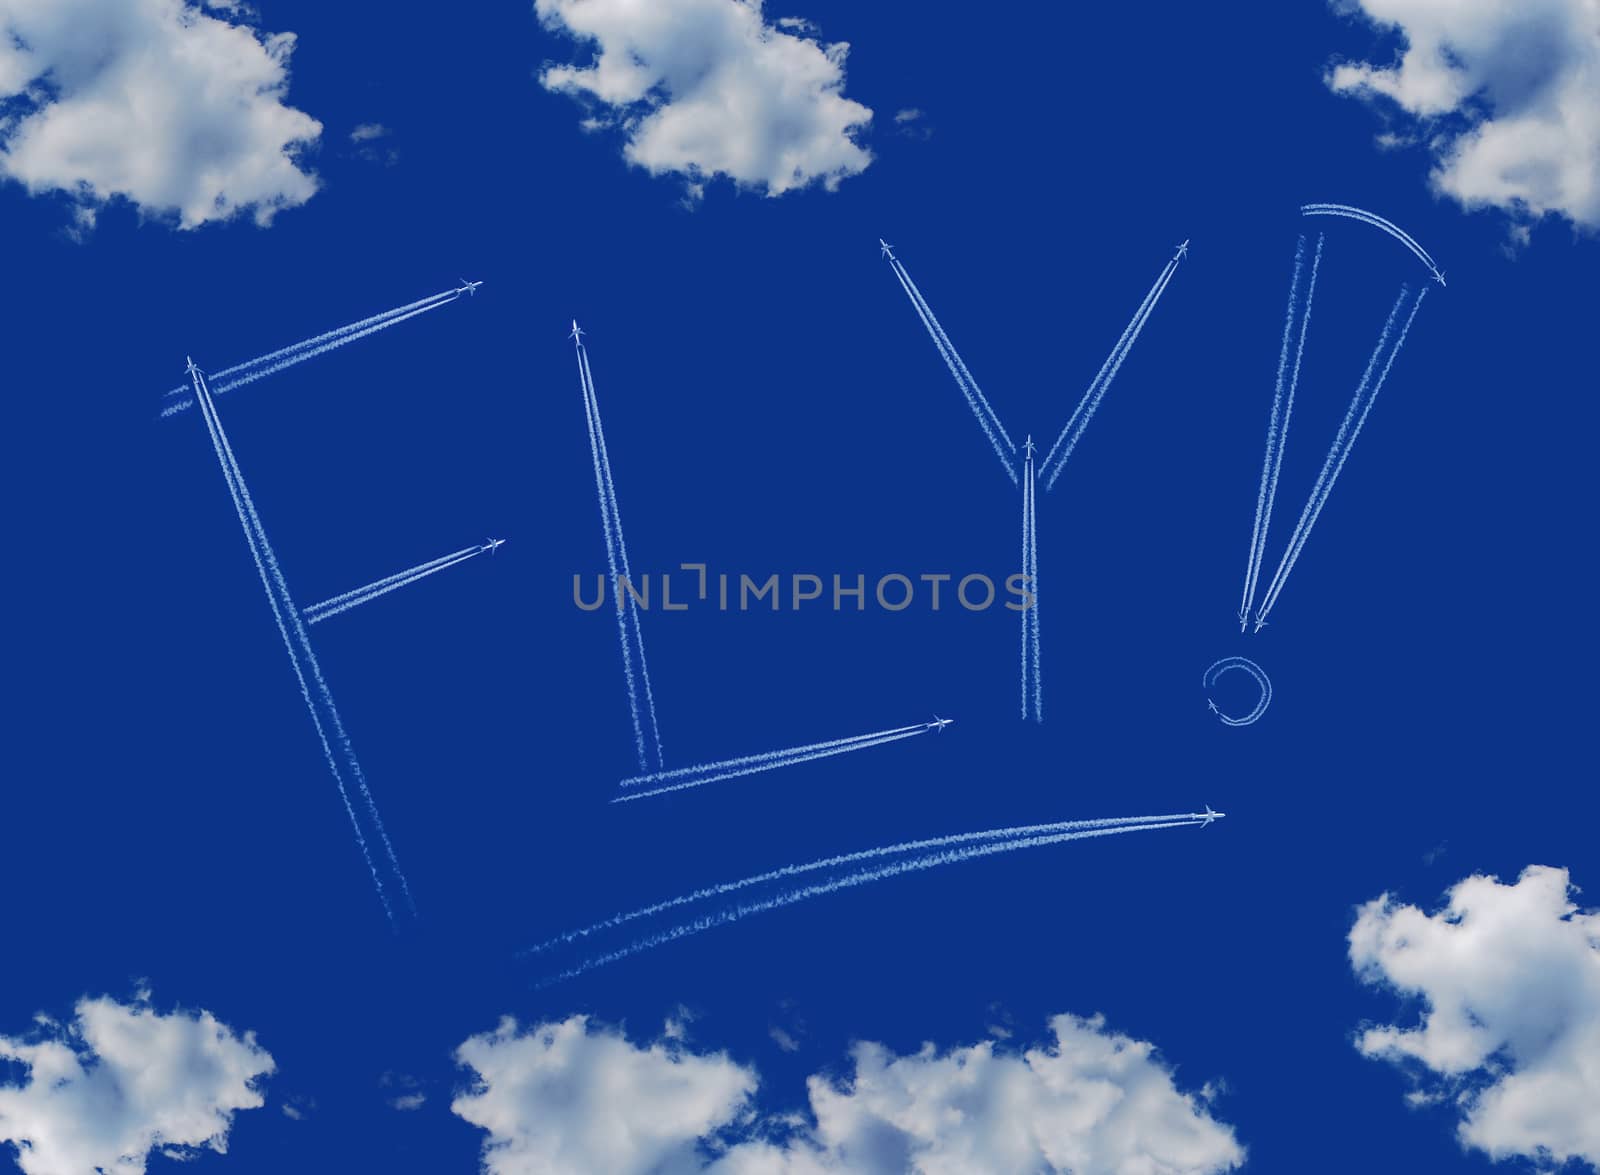 Fly inscription on a blue sky, line of aircraft